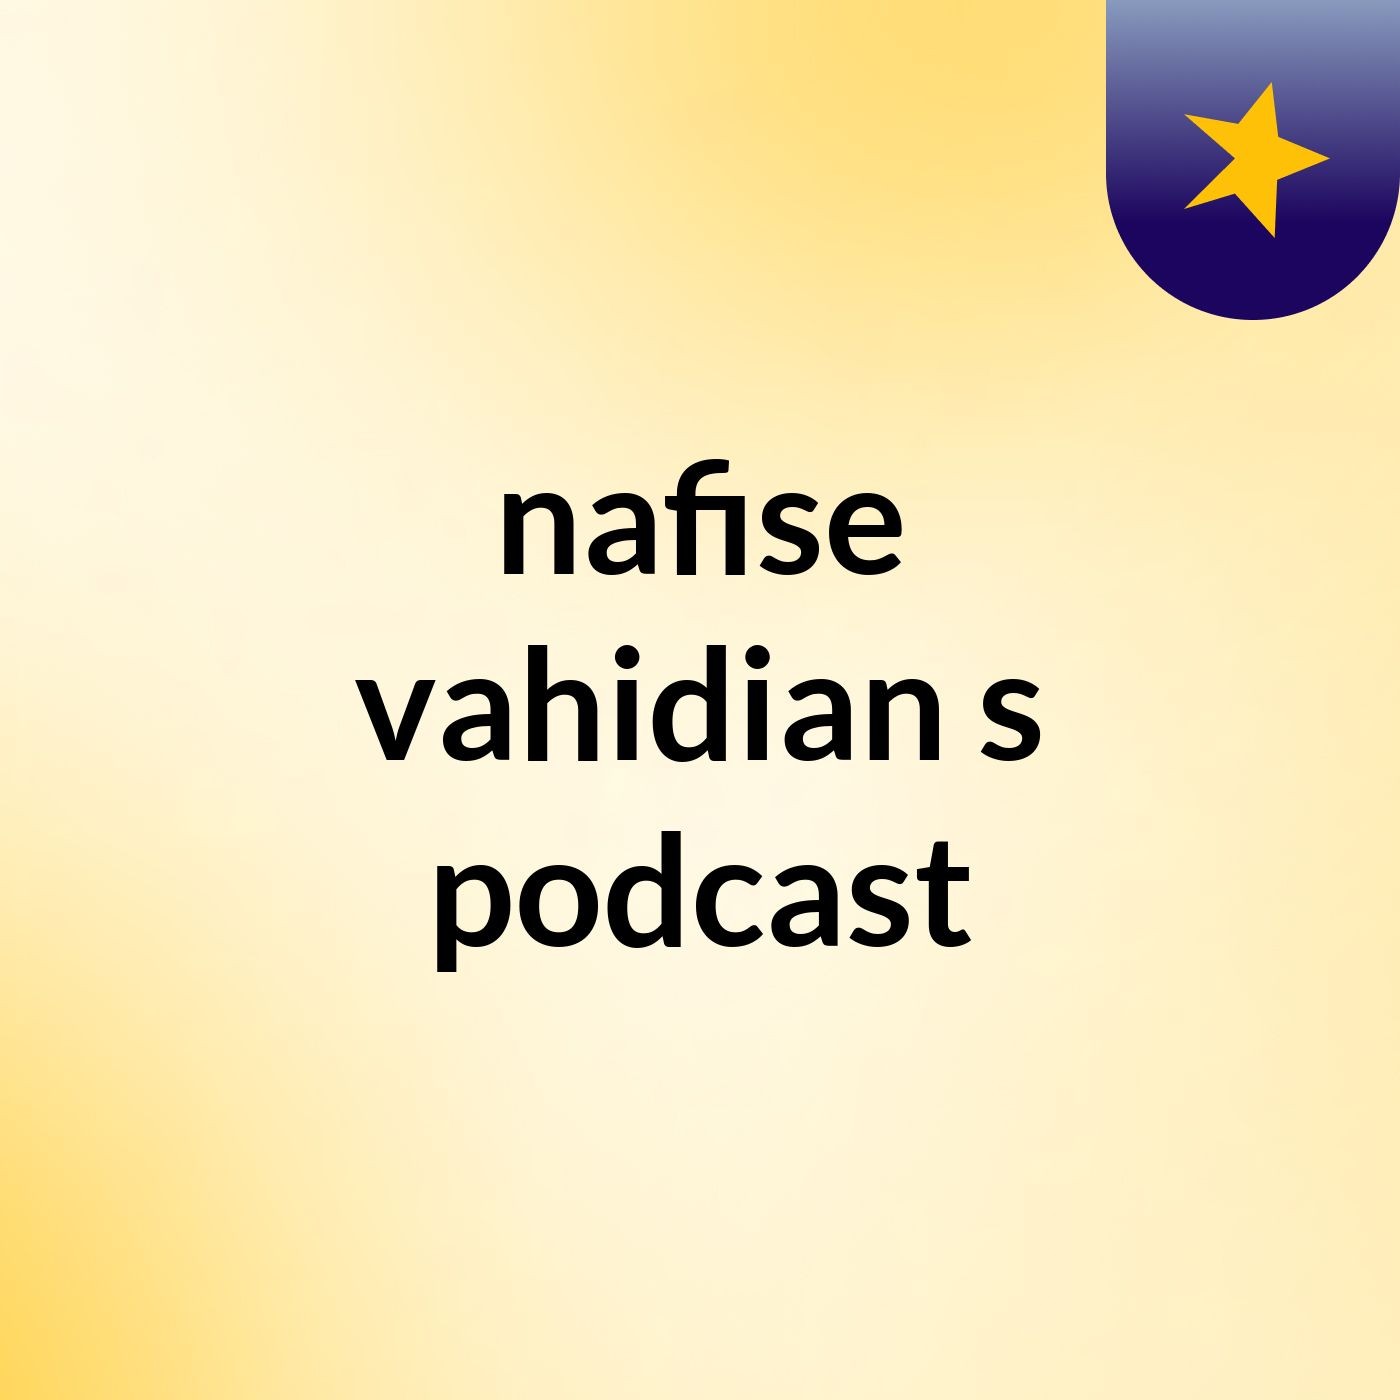 nafise vahidian's podcast